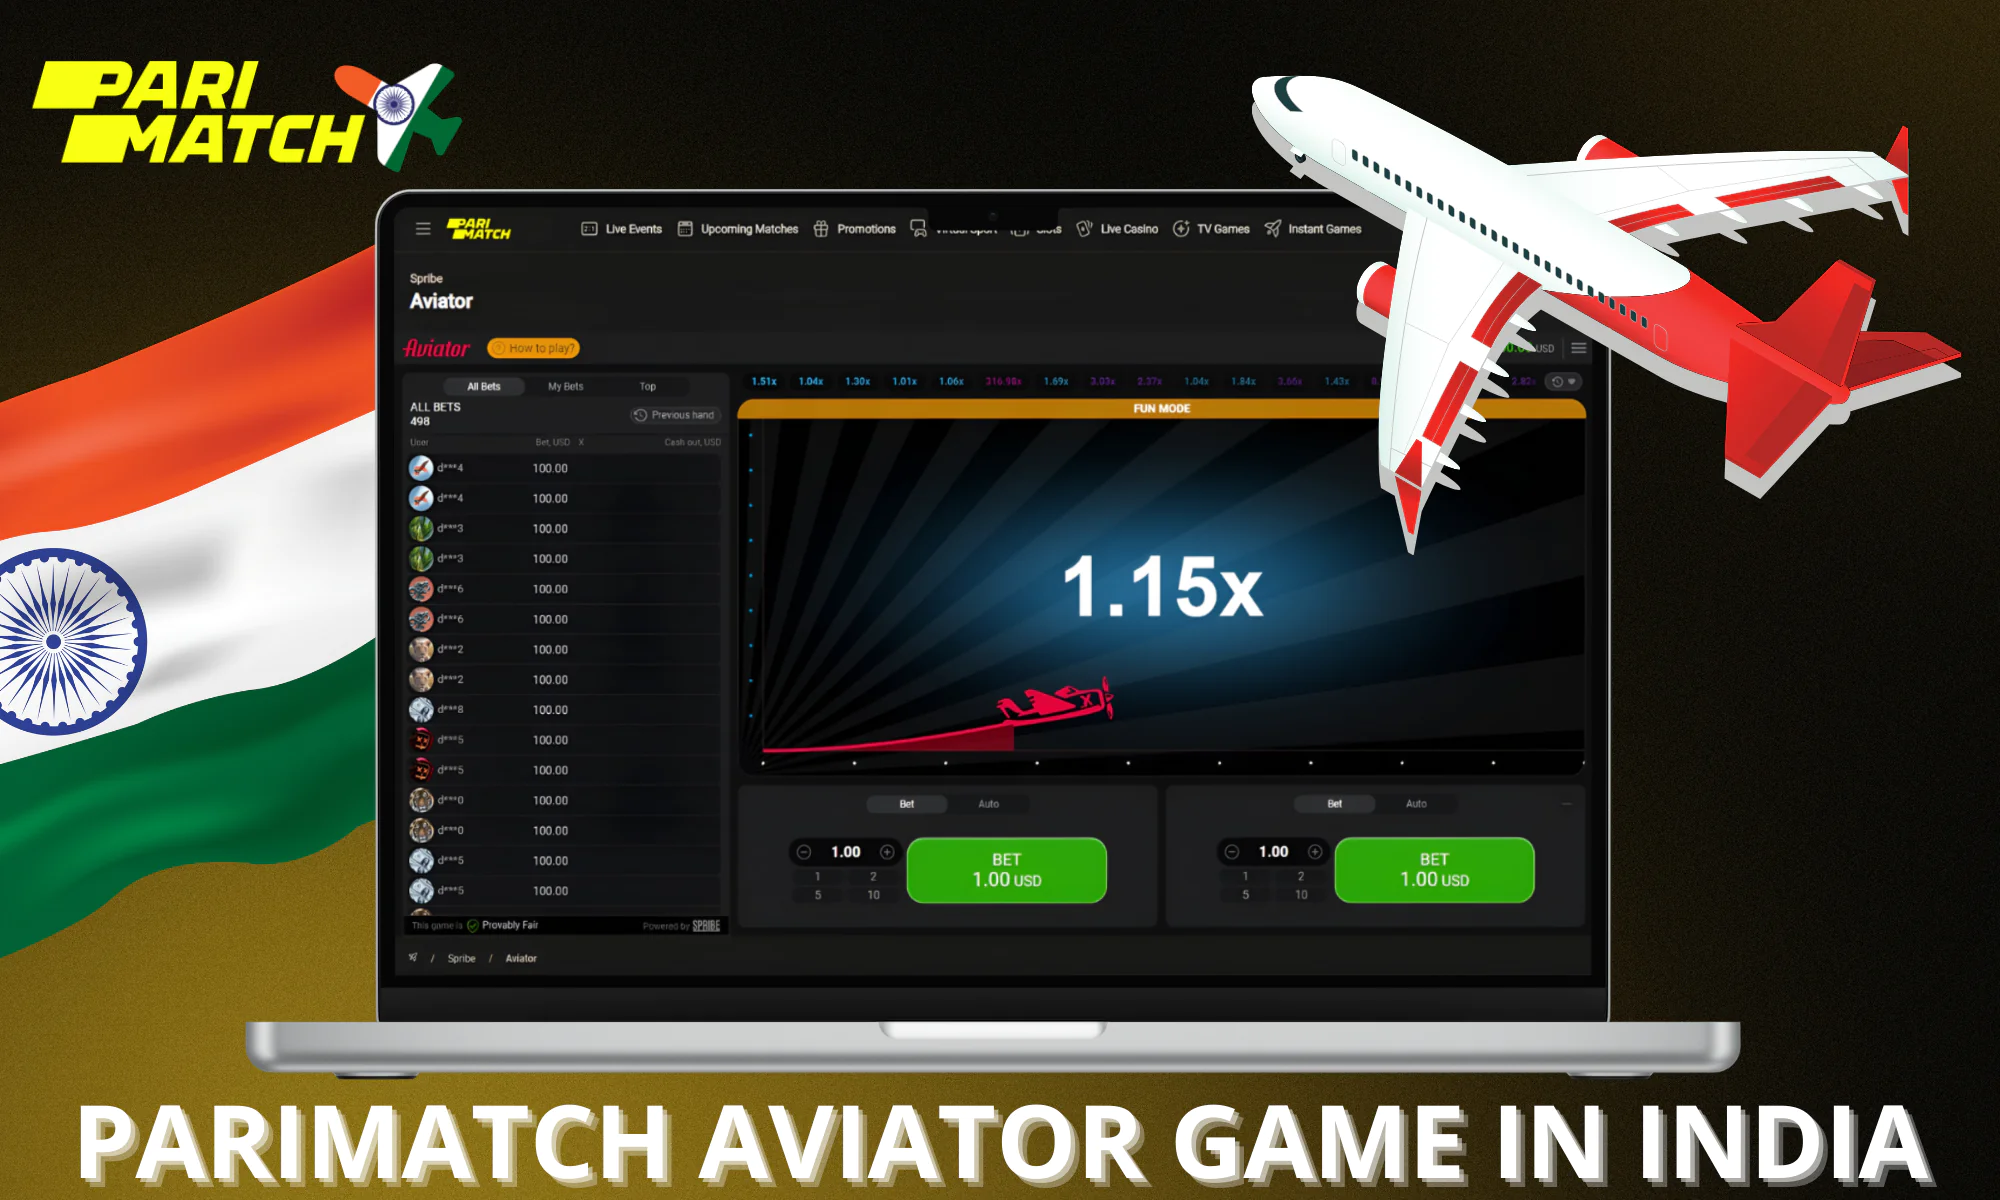 Parimatch Aviator is a popular crash gambling game